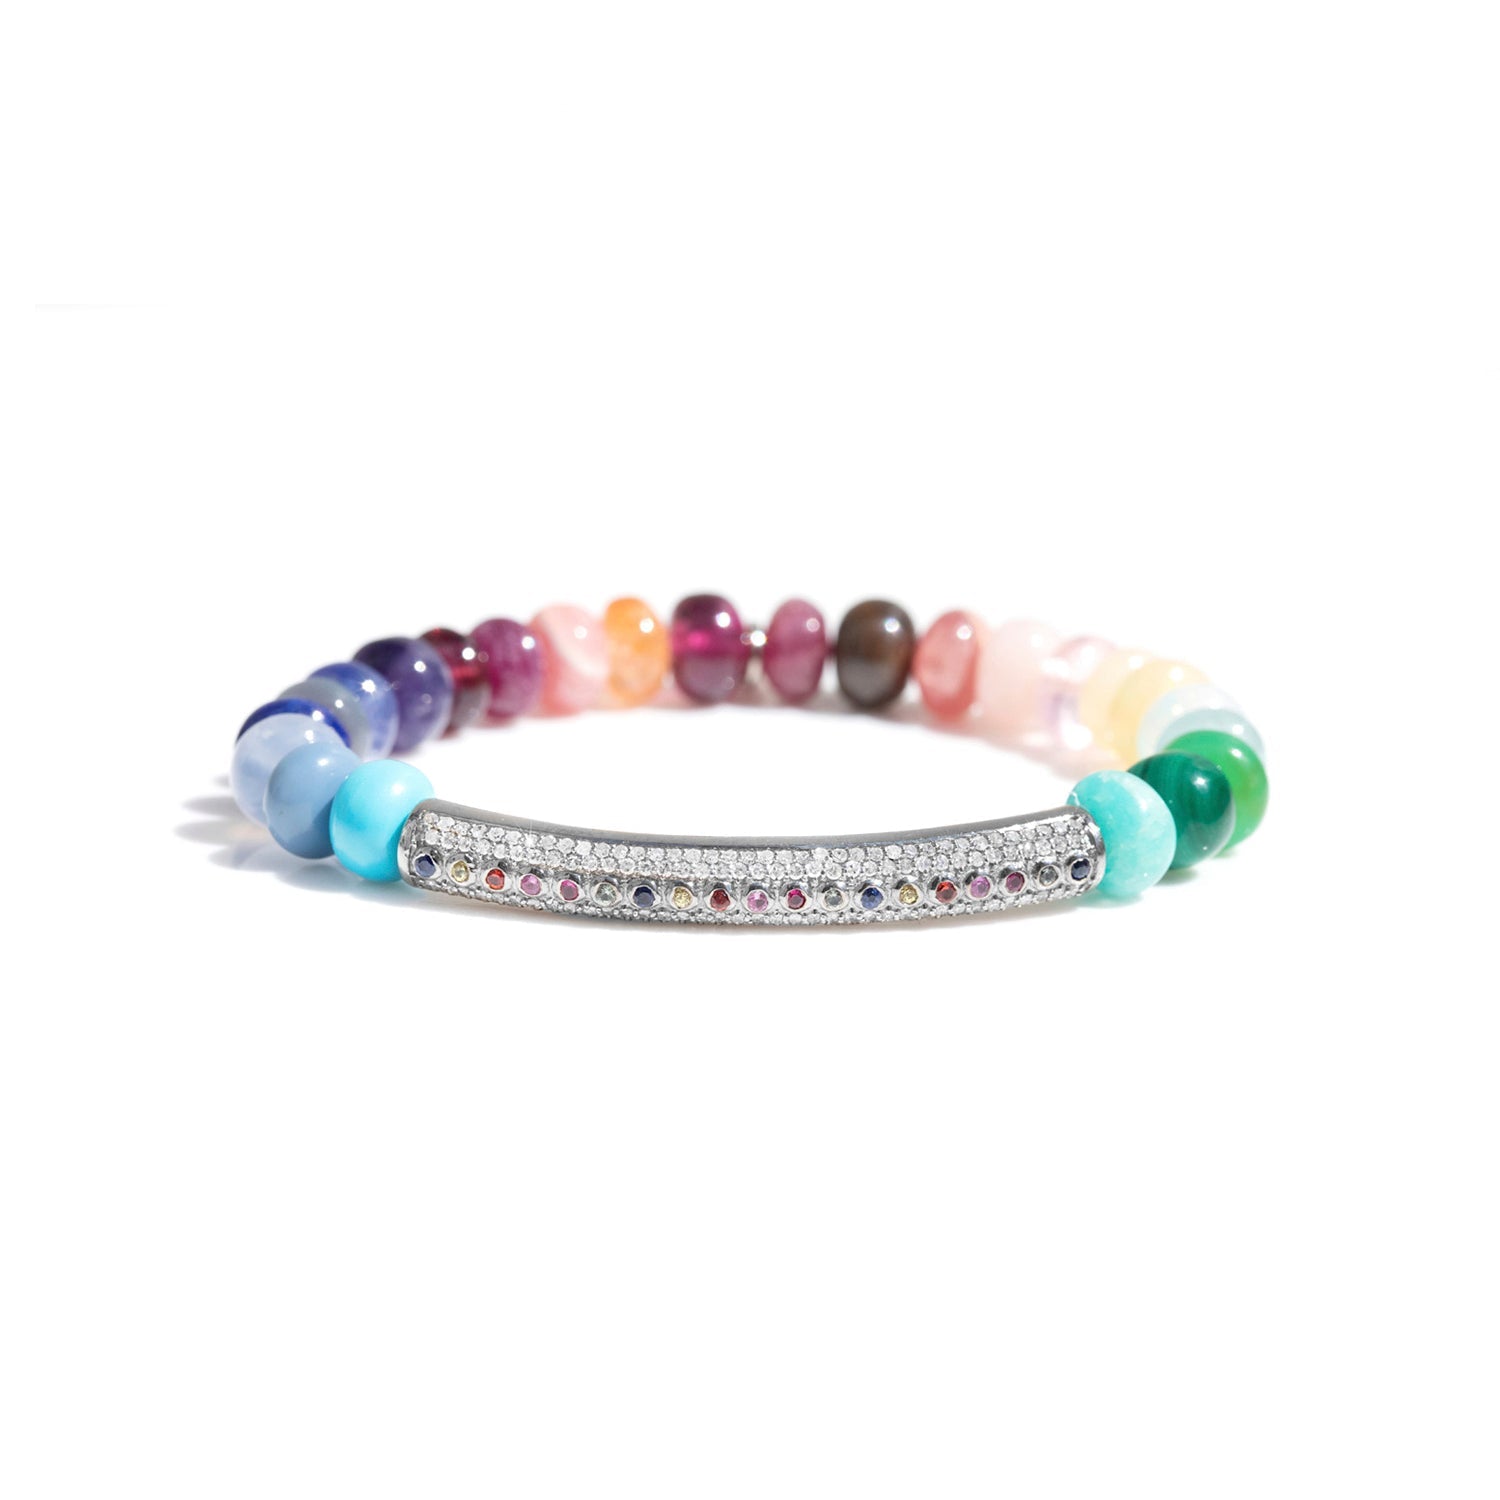 Rainbow Gemstone Mix Bracelet with Pave Diamond Bar - 8mm : B0003486 - TBird